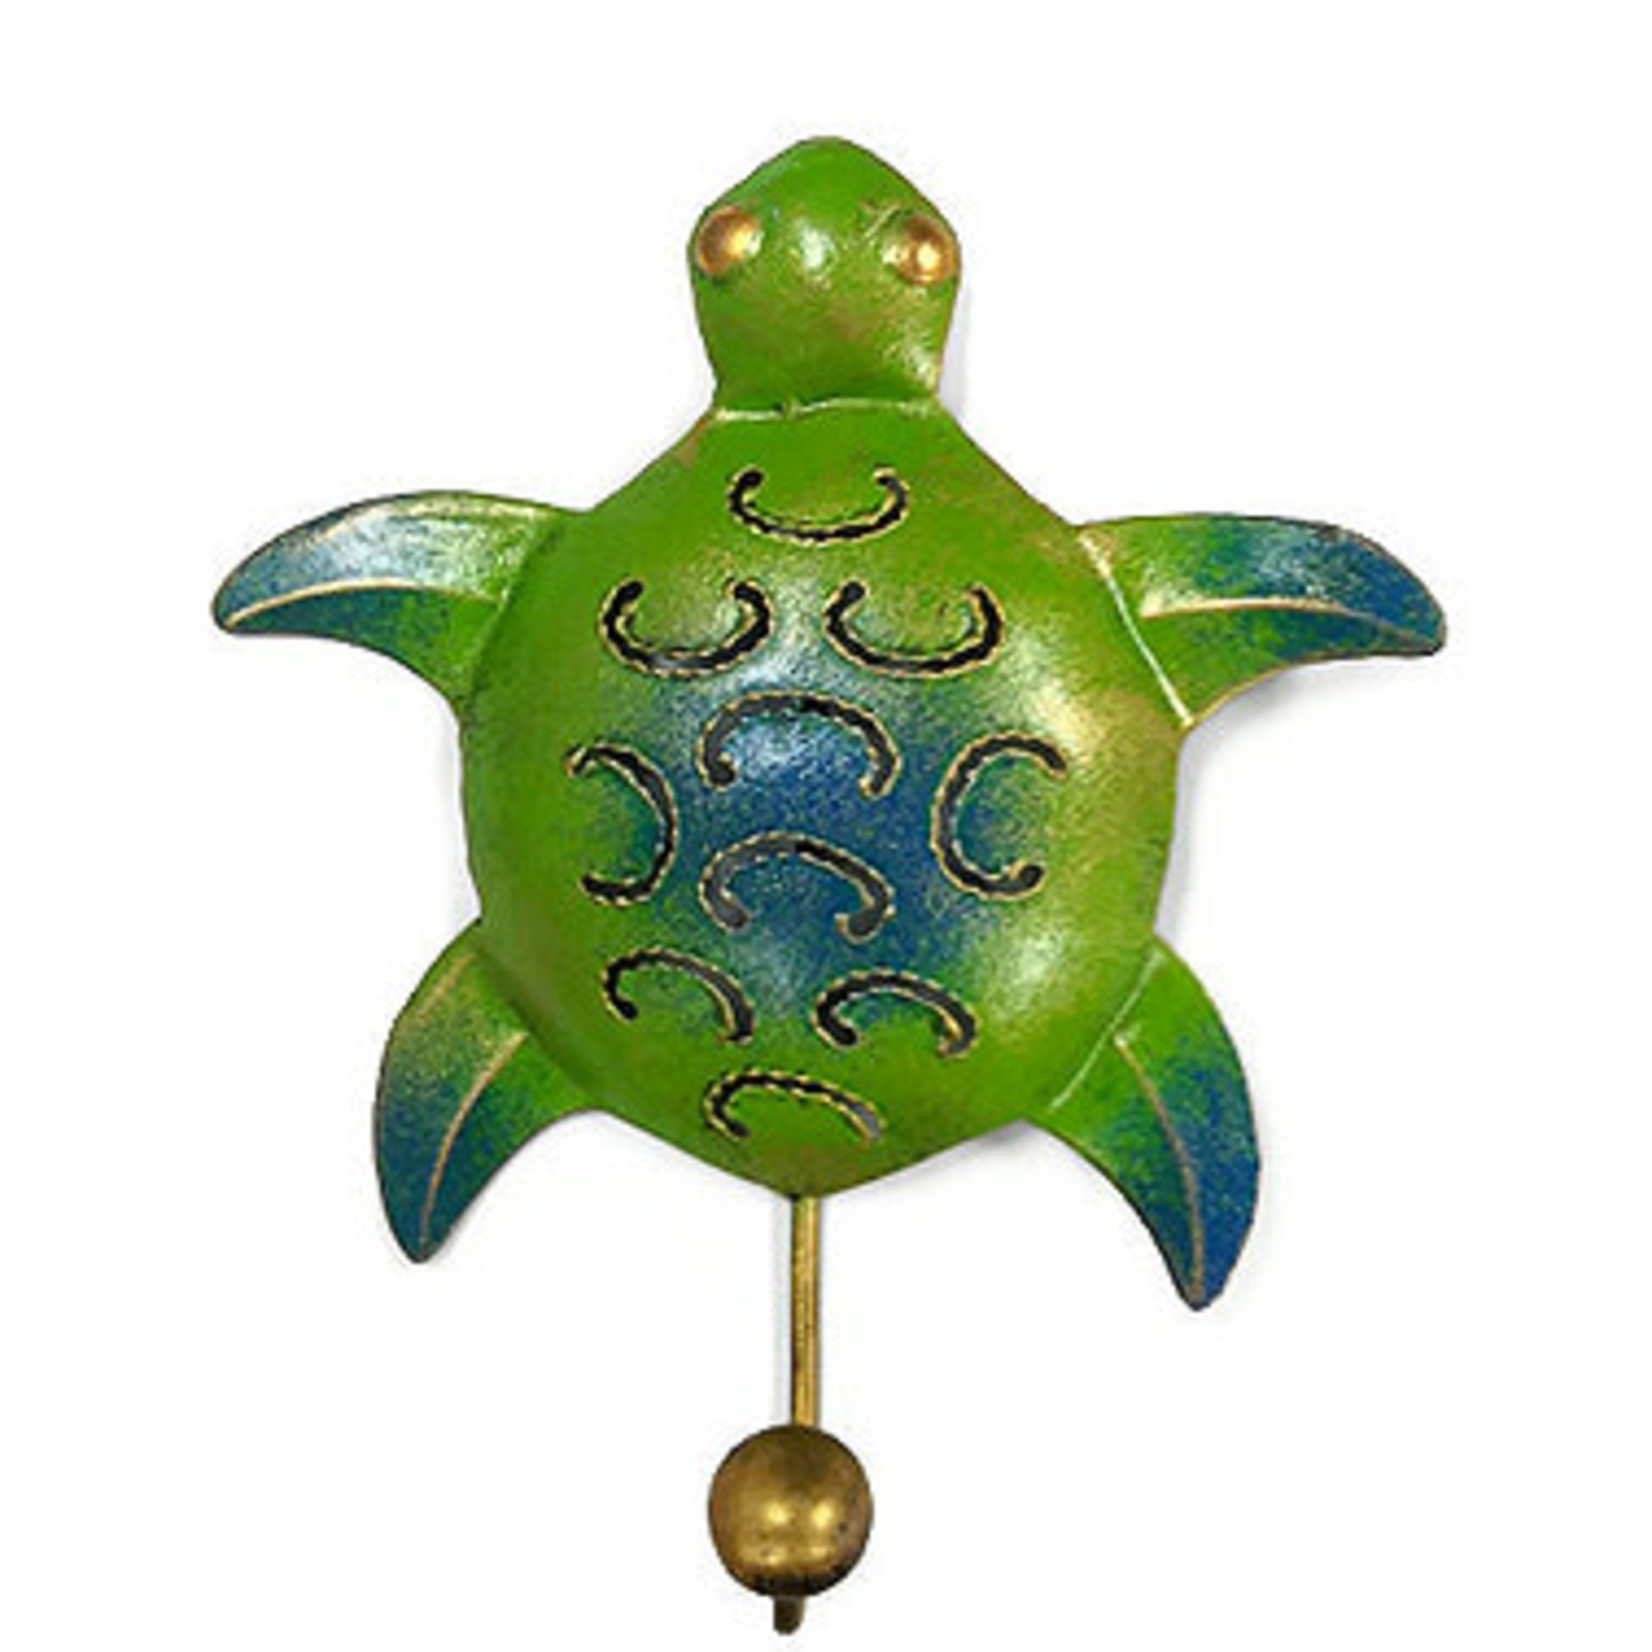 Handmade and Painted Iron Hook Turtle